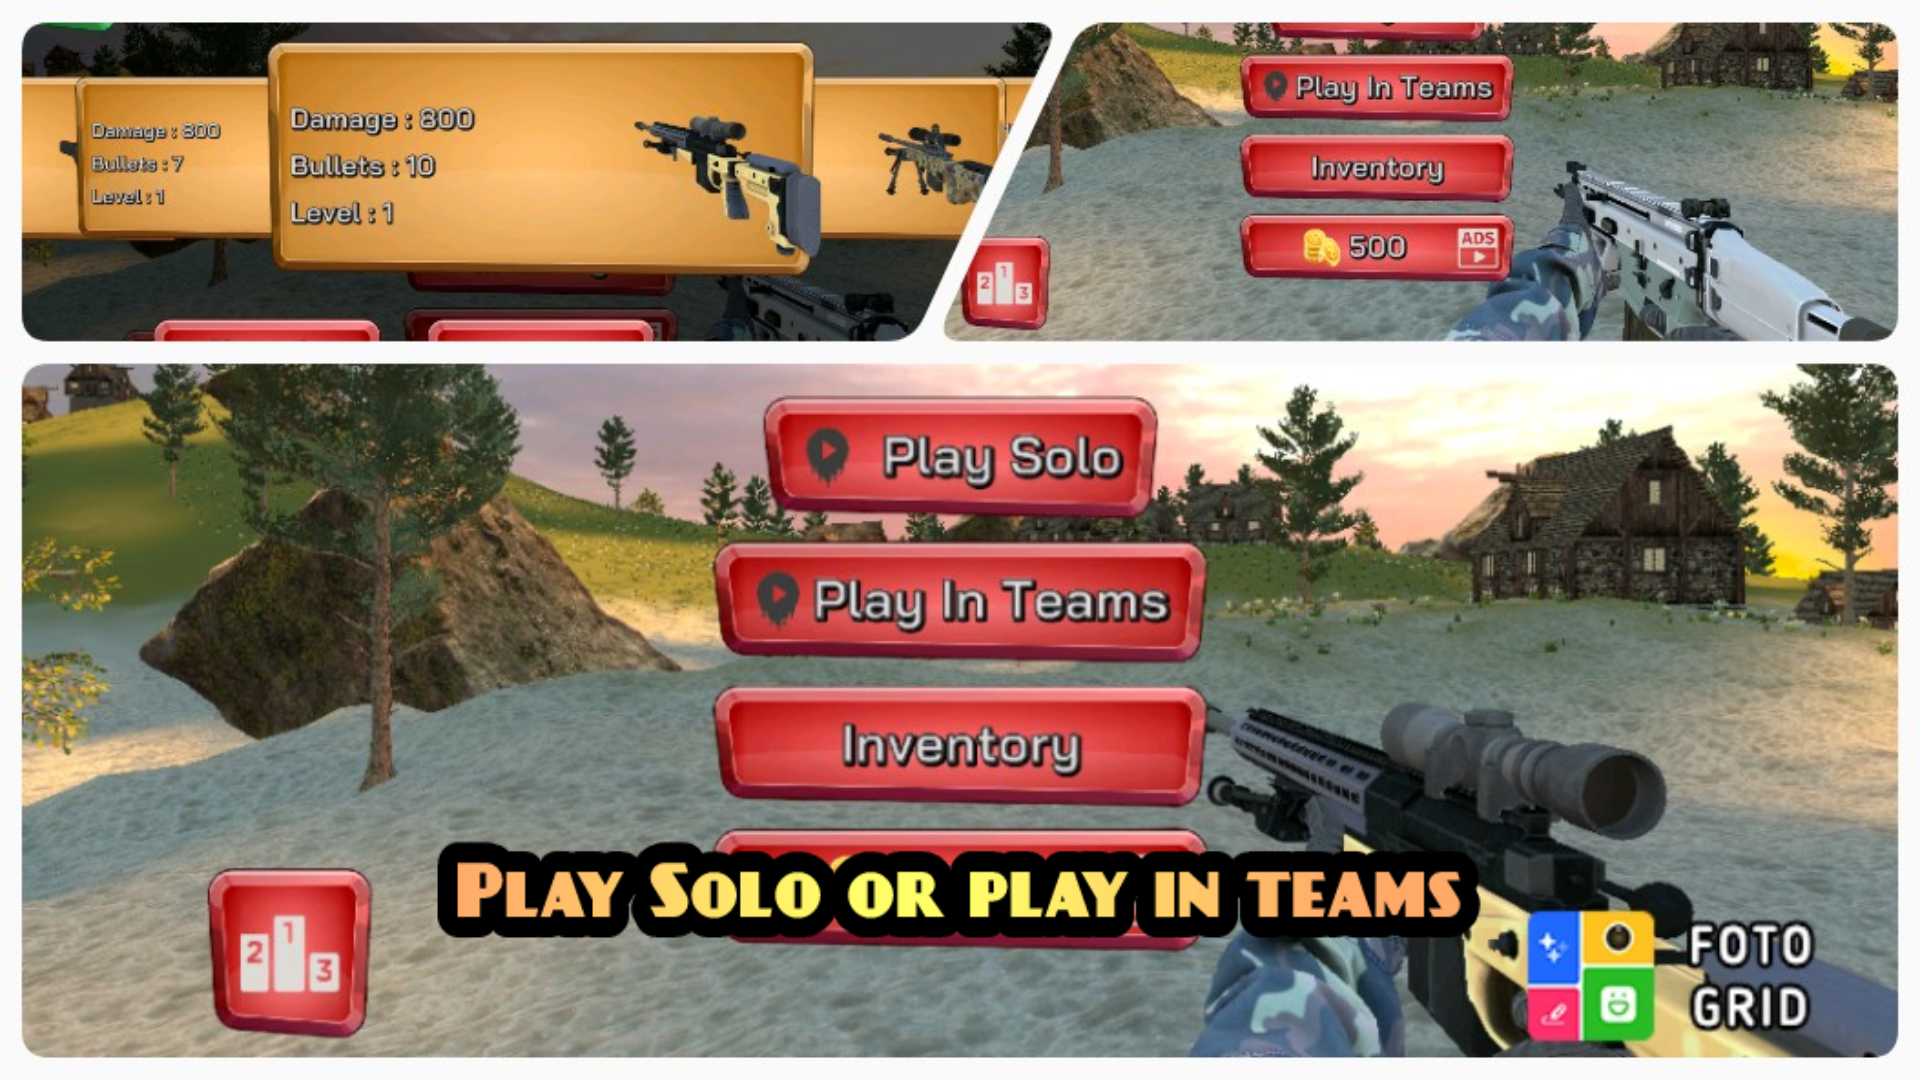 Screenshot 1 of សង្គ្រាមបាញ់ប្រហារលើបណ្តាញ FPS 21